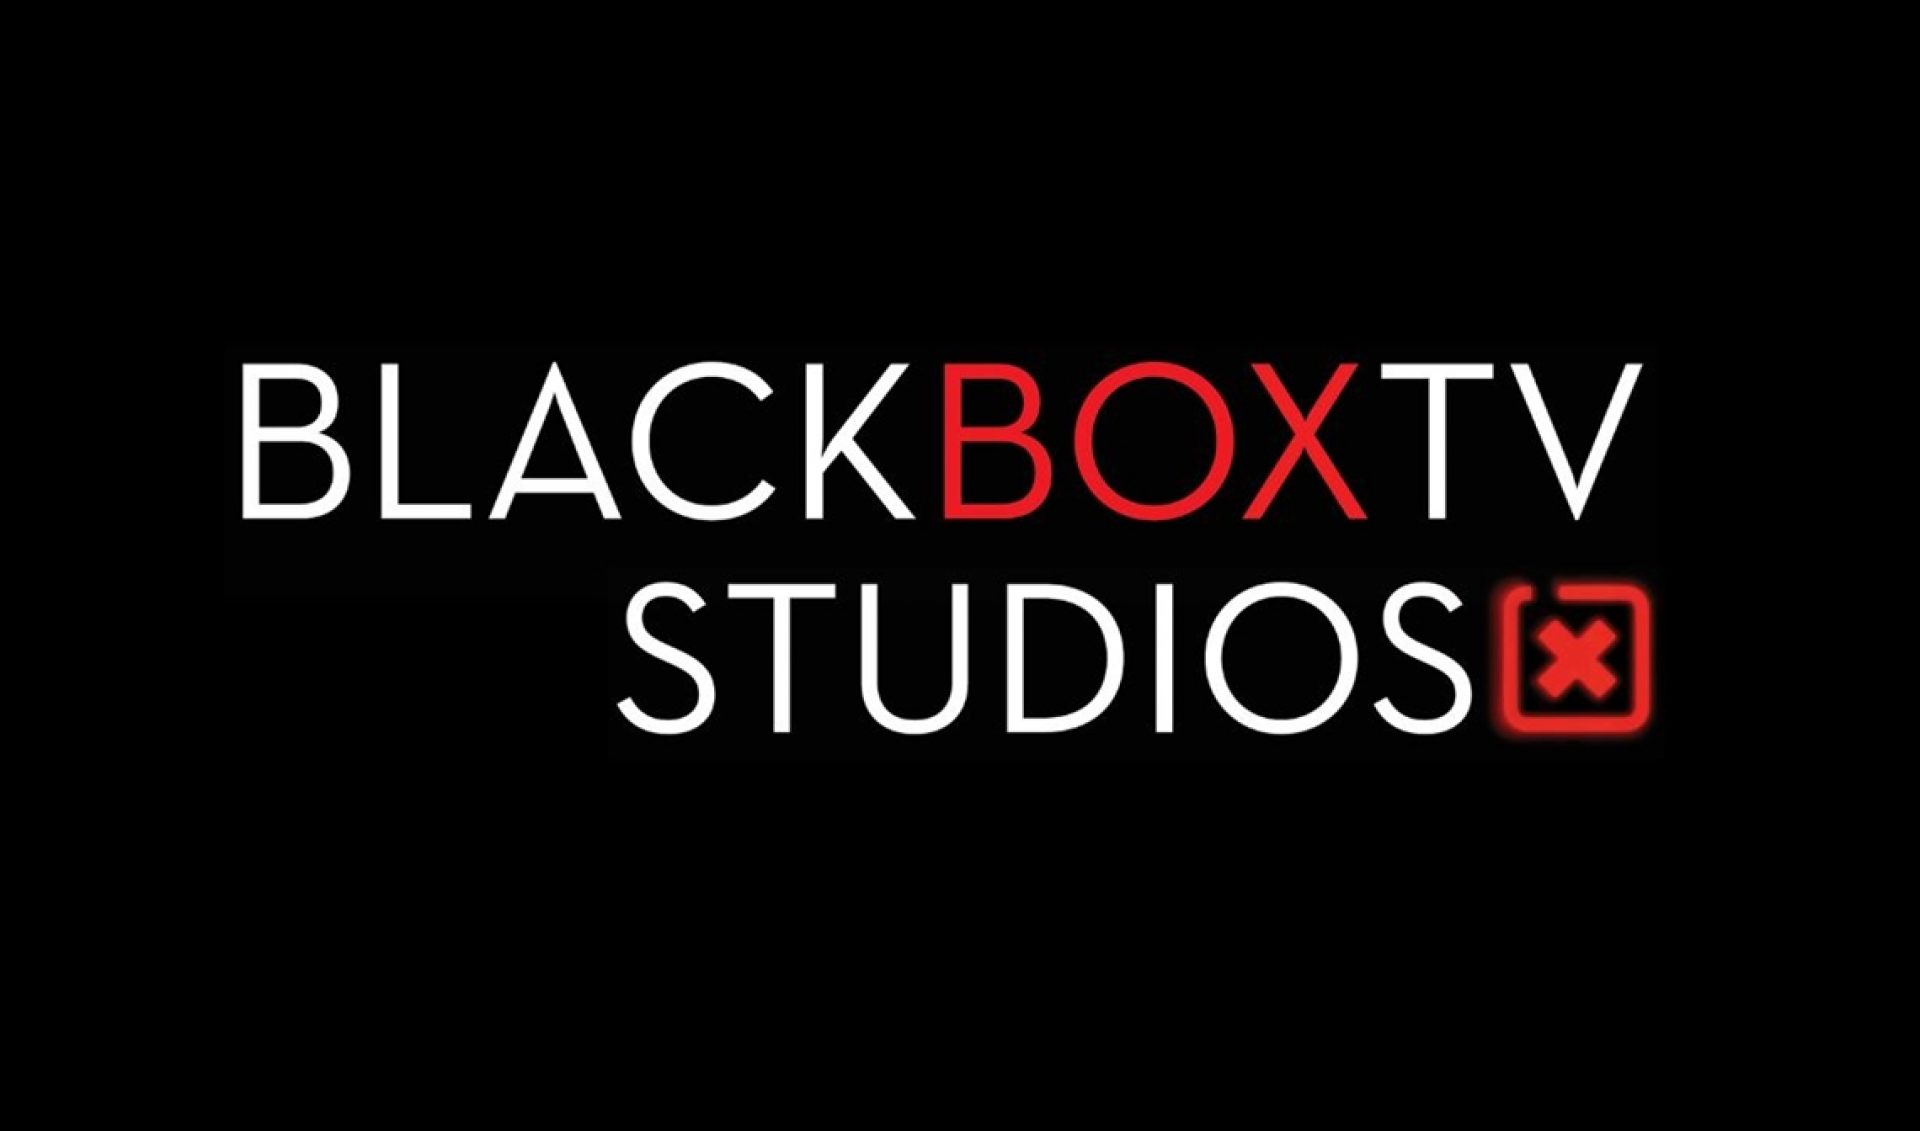 Multi-Platform Network Collab Signs YouTube Horror VR Channel BlackBoxTV